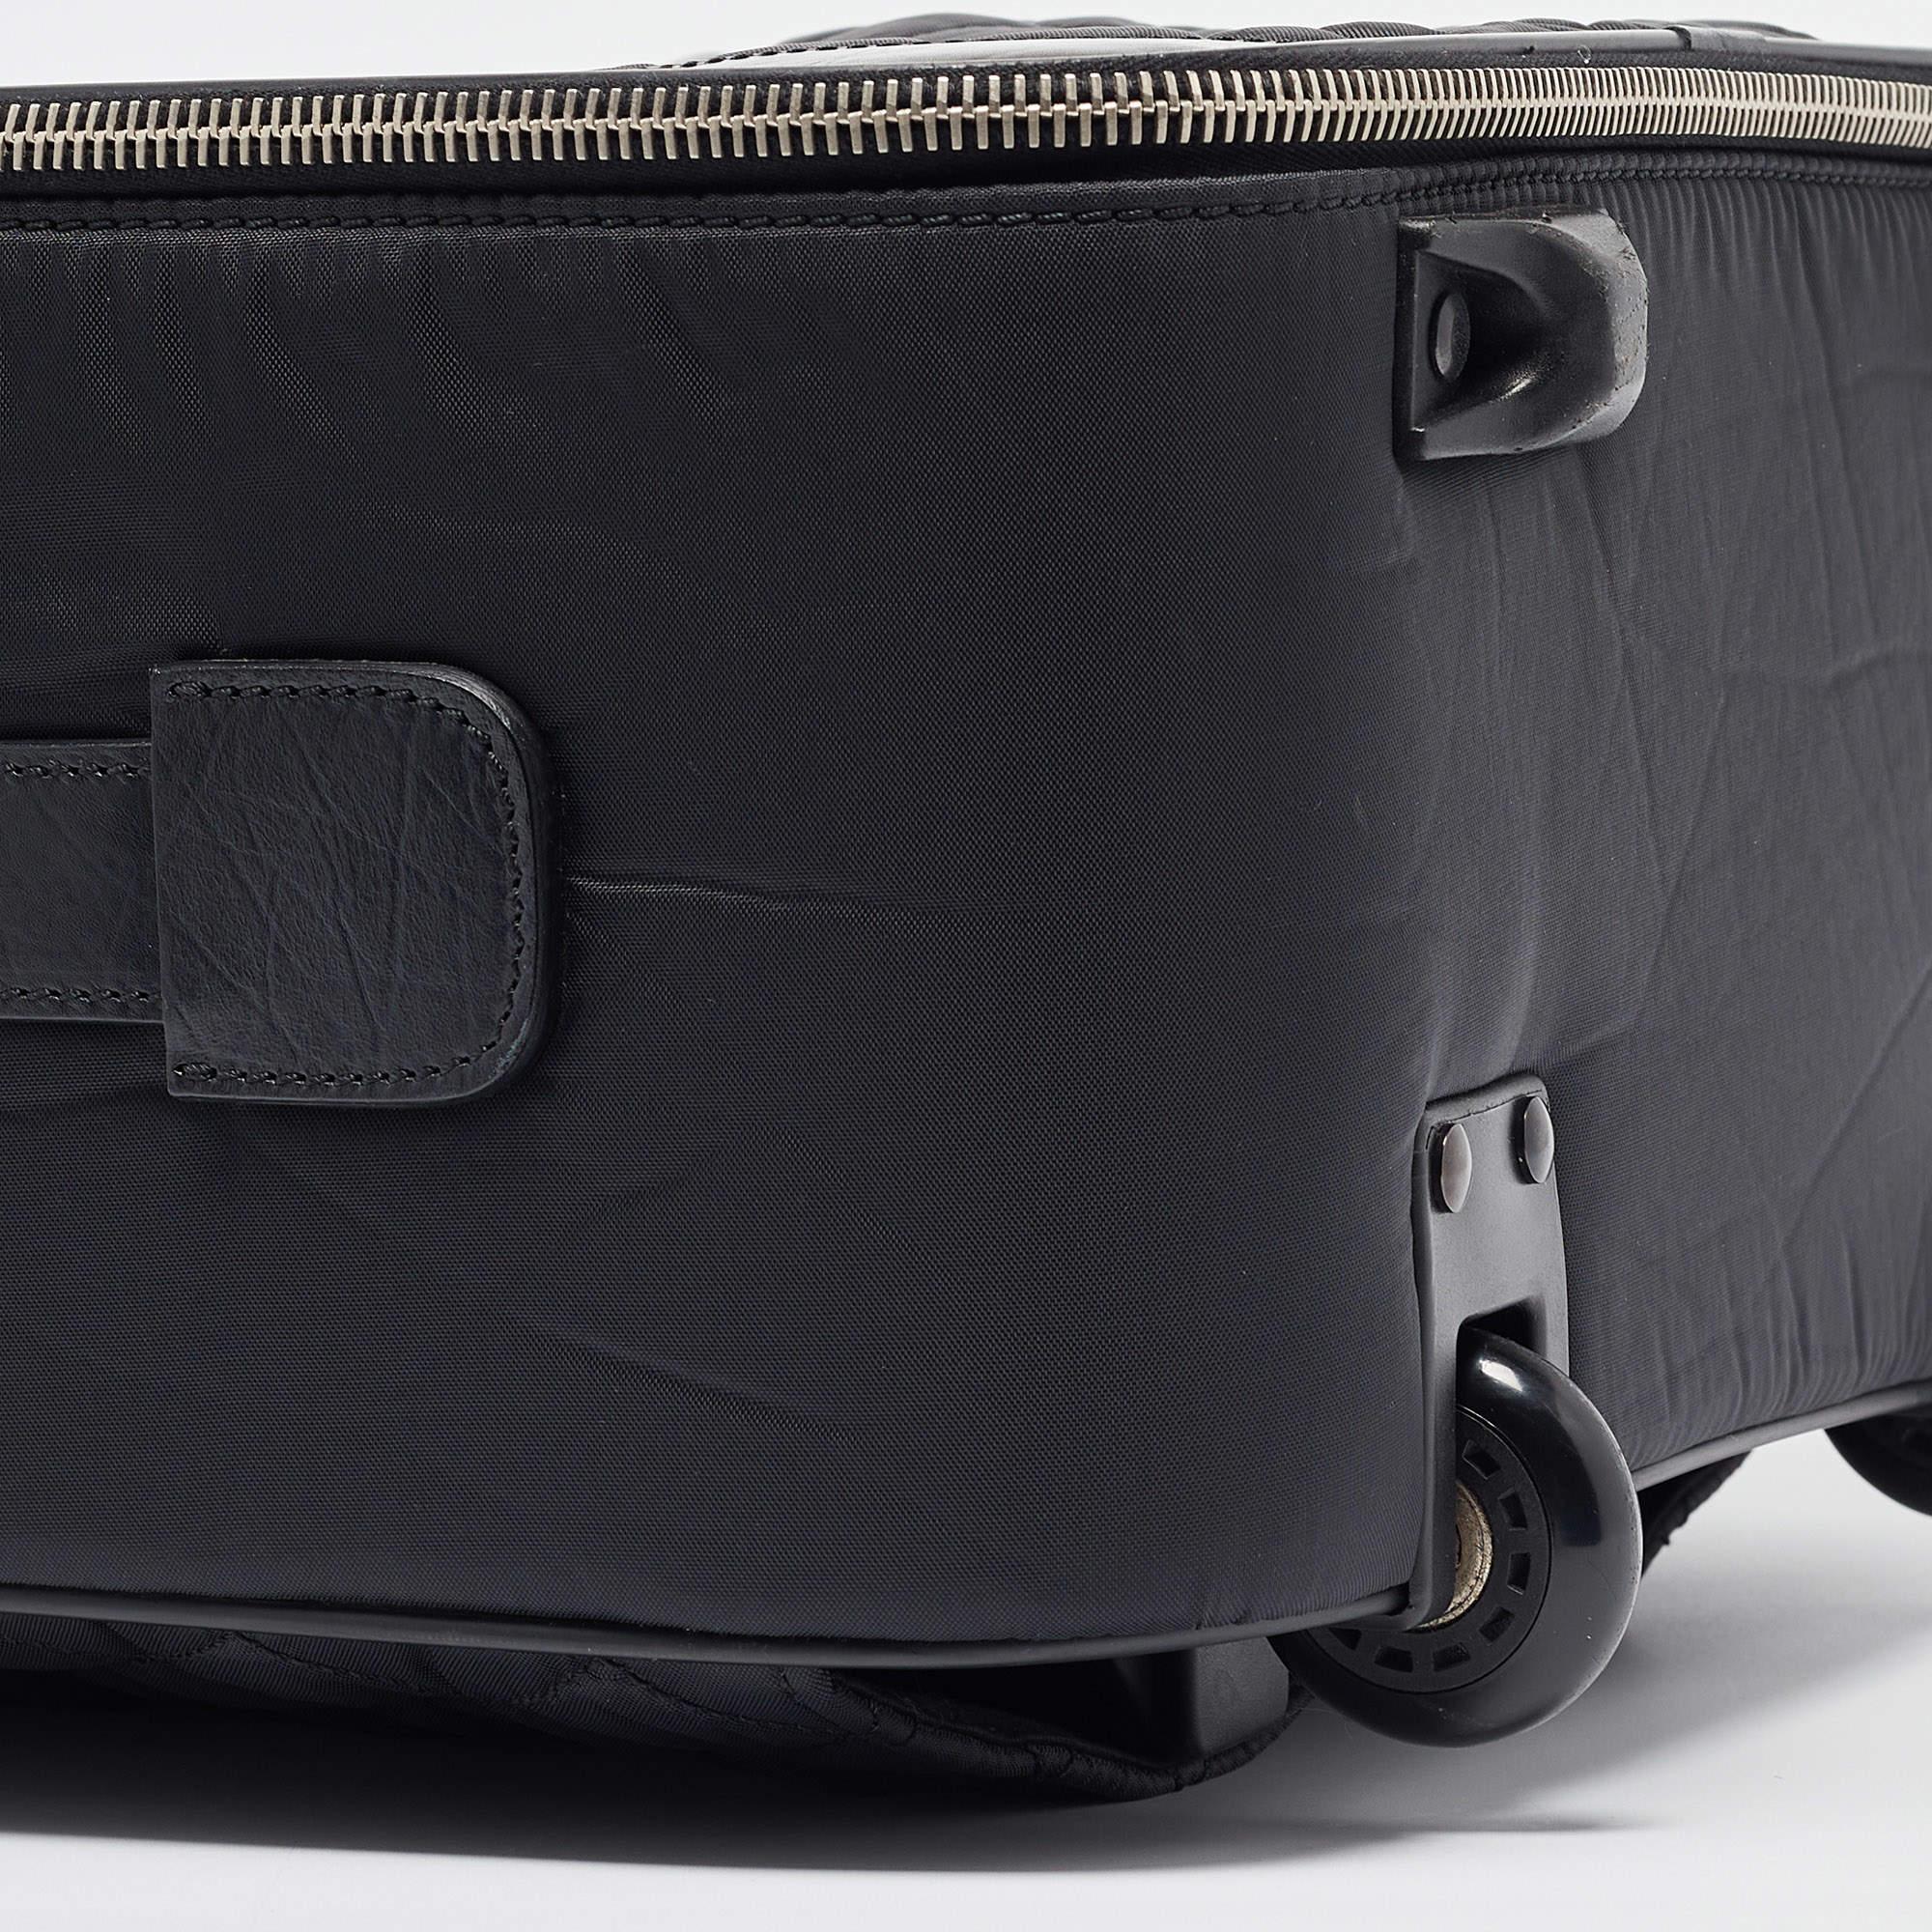 Chanel Black Quilted Nylon 2 Wheeled CC Luggage (Bagages à 2 roues en nylon matelassé) 11